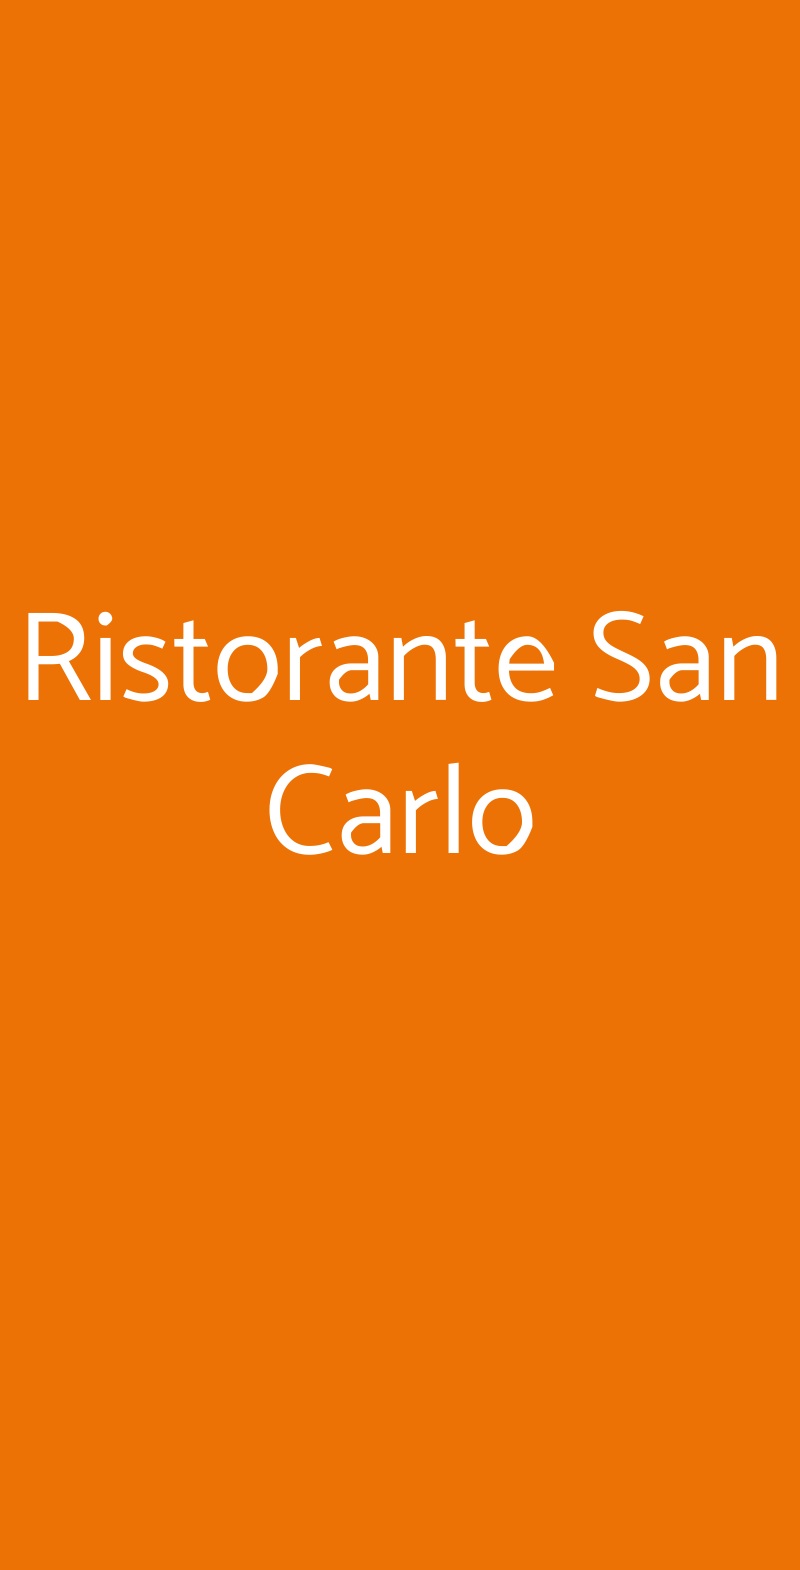 Ristorante San Carlo Alfonsine menù 1 pagina